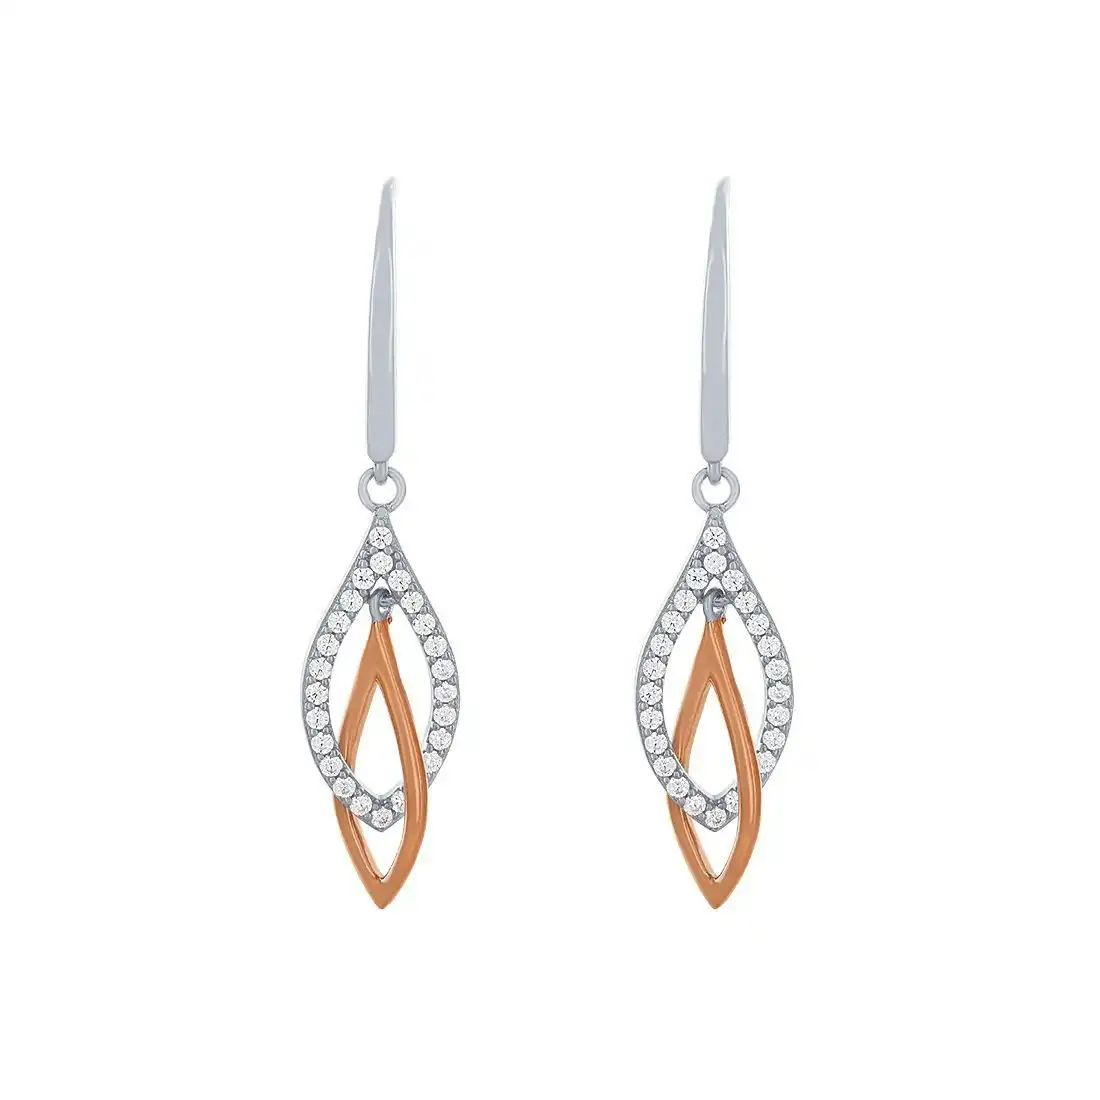 Drop Hook Earrings with Cubic Zirconia in Sterling Silver